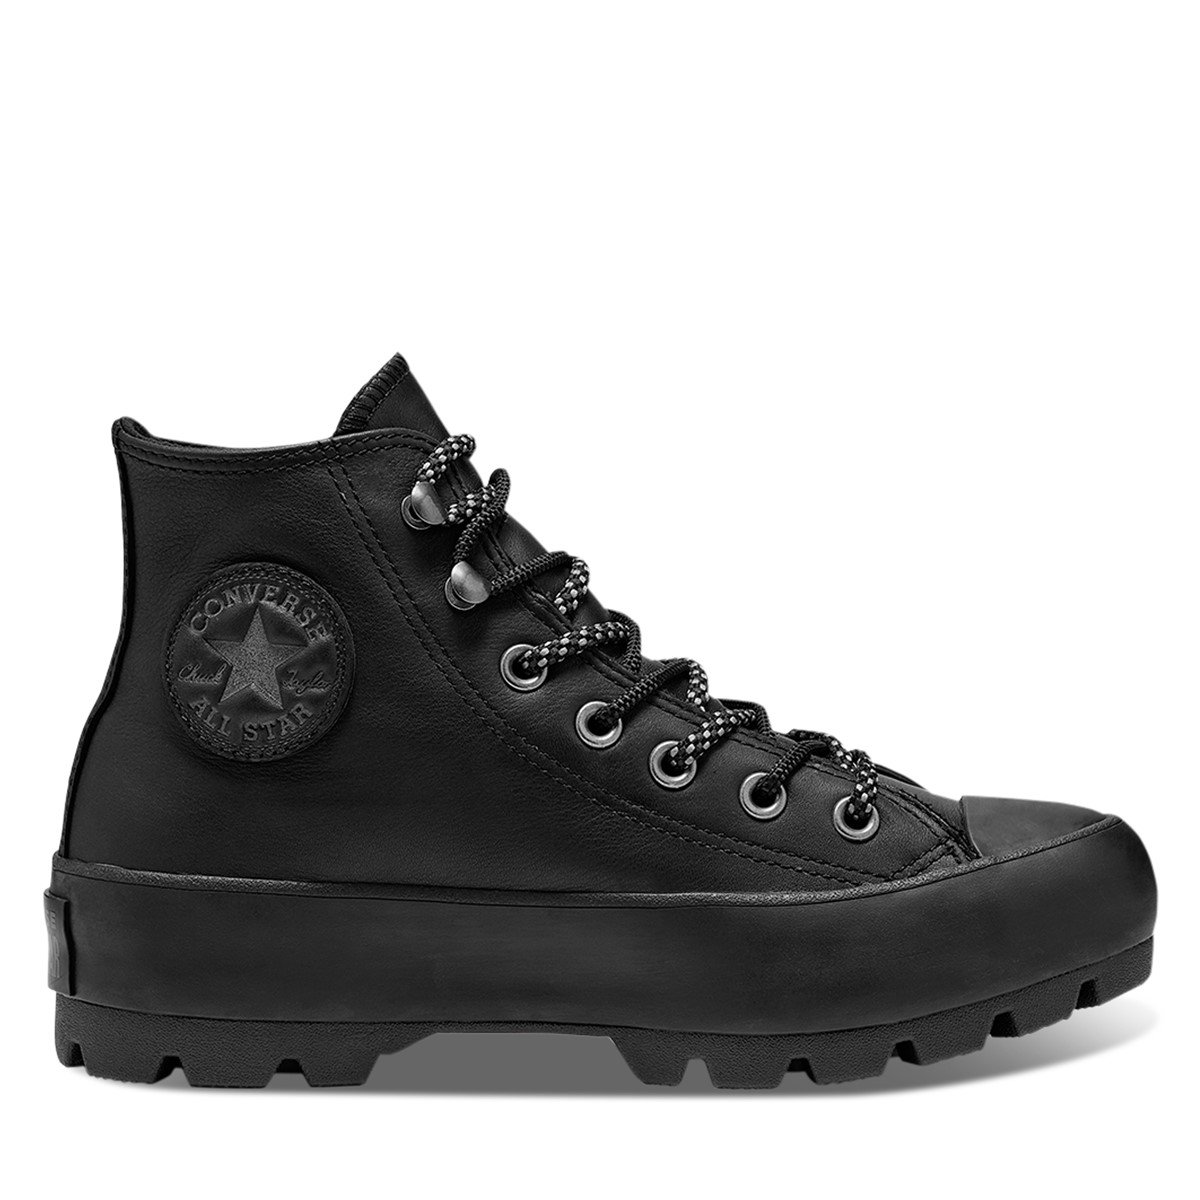 all black gore tex boots